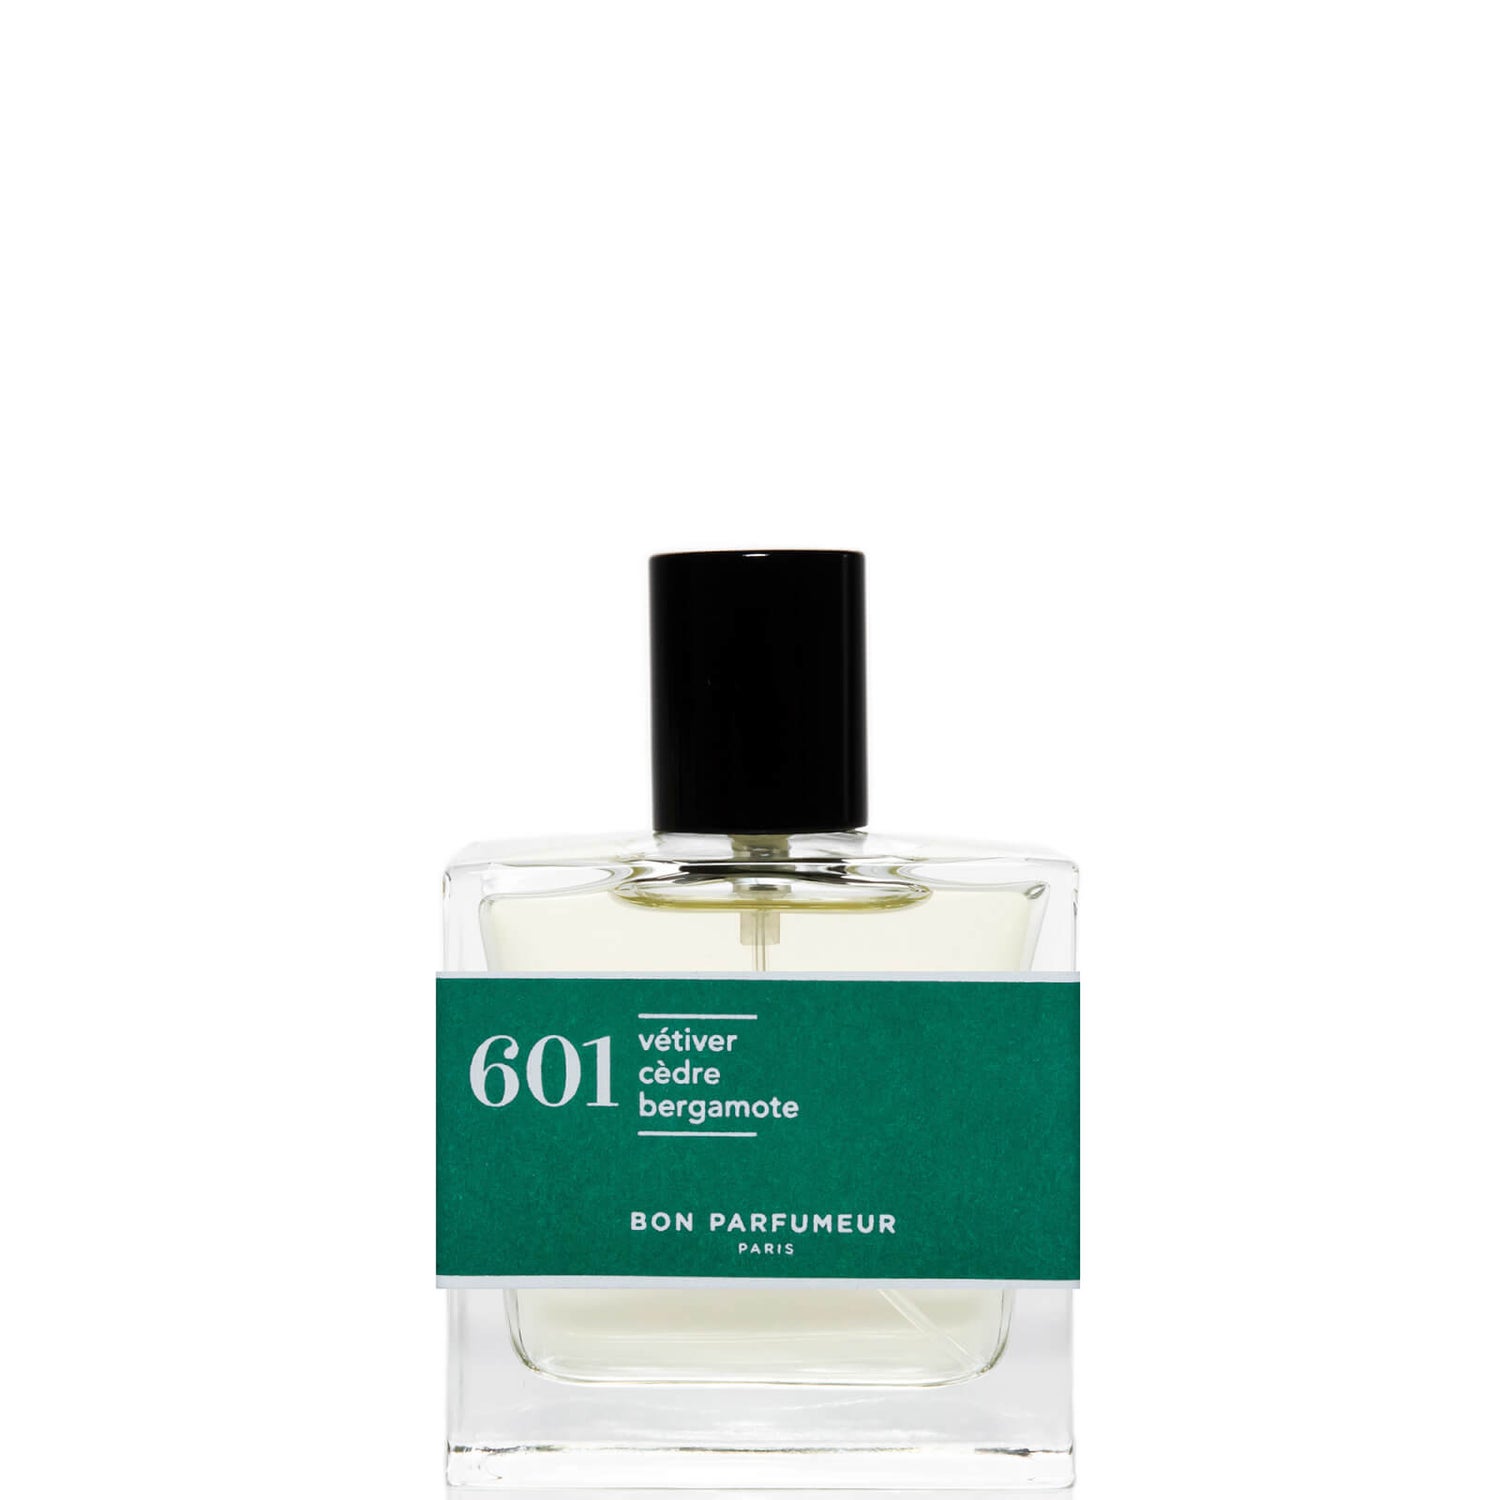 Bon Parfumeur 601 Vetiver Cedar Bergamot Eau de Parfum - 30 ml